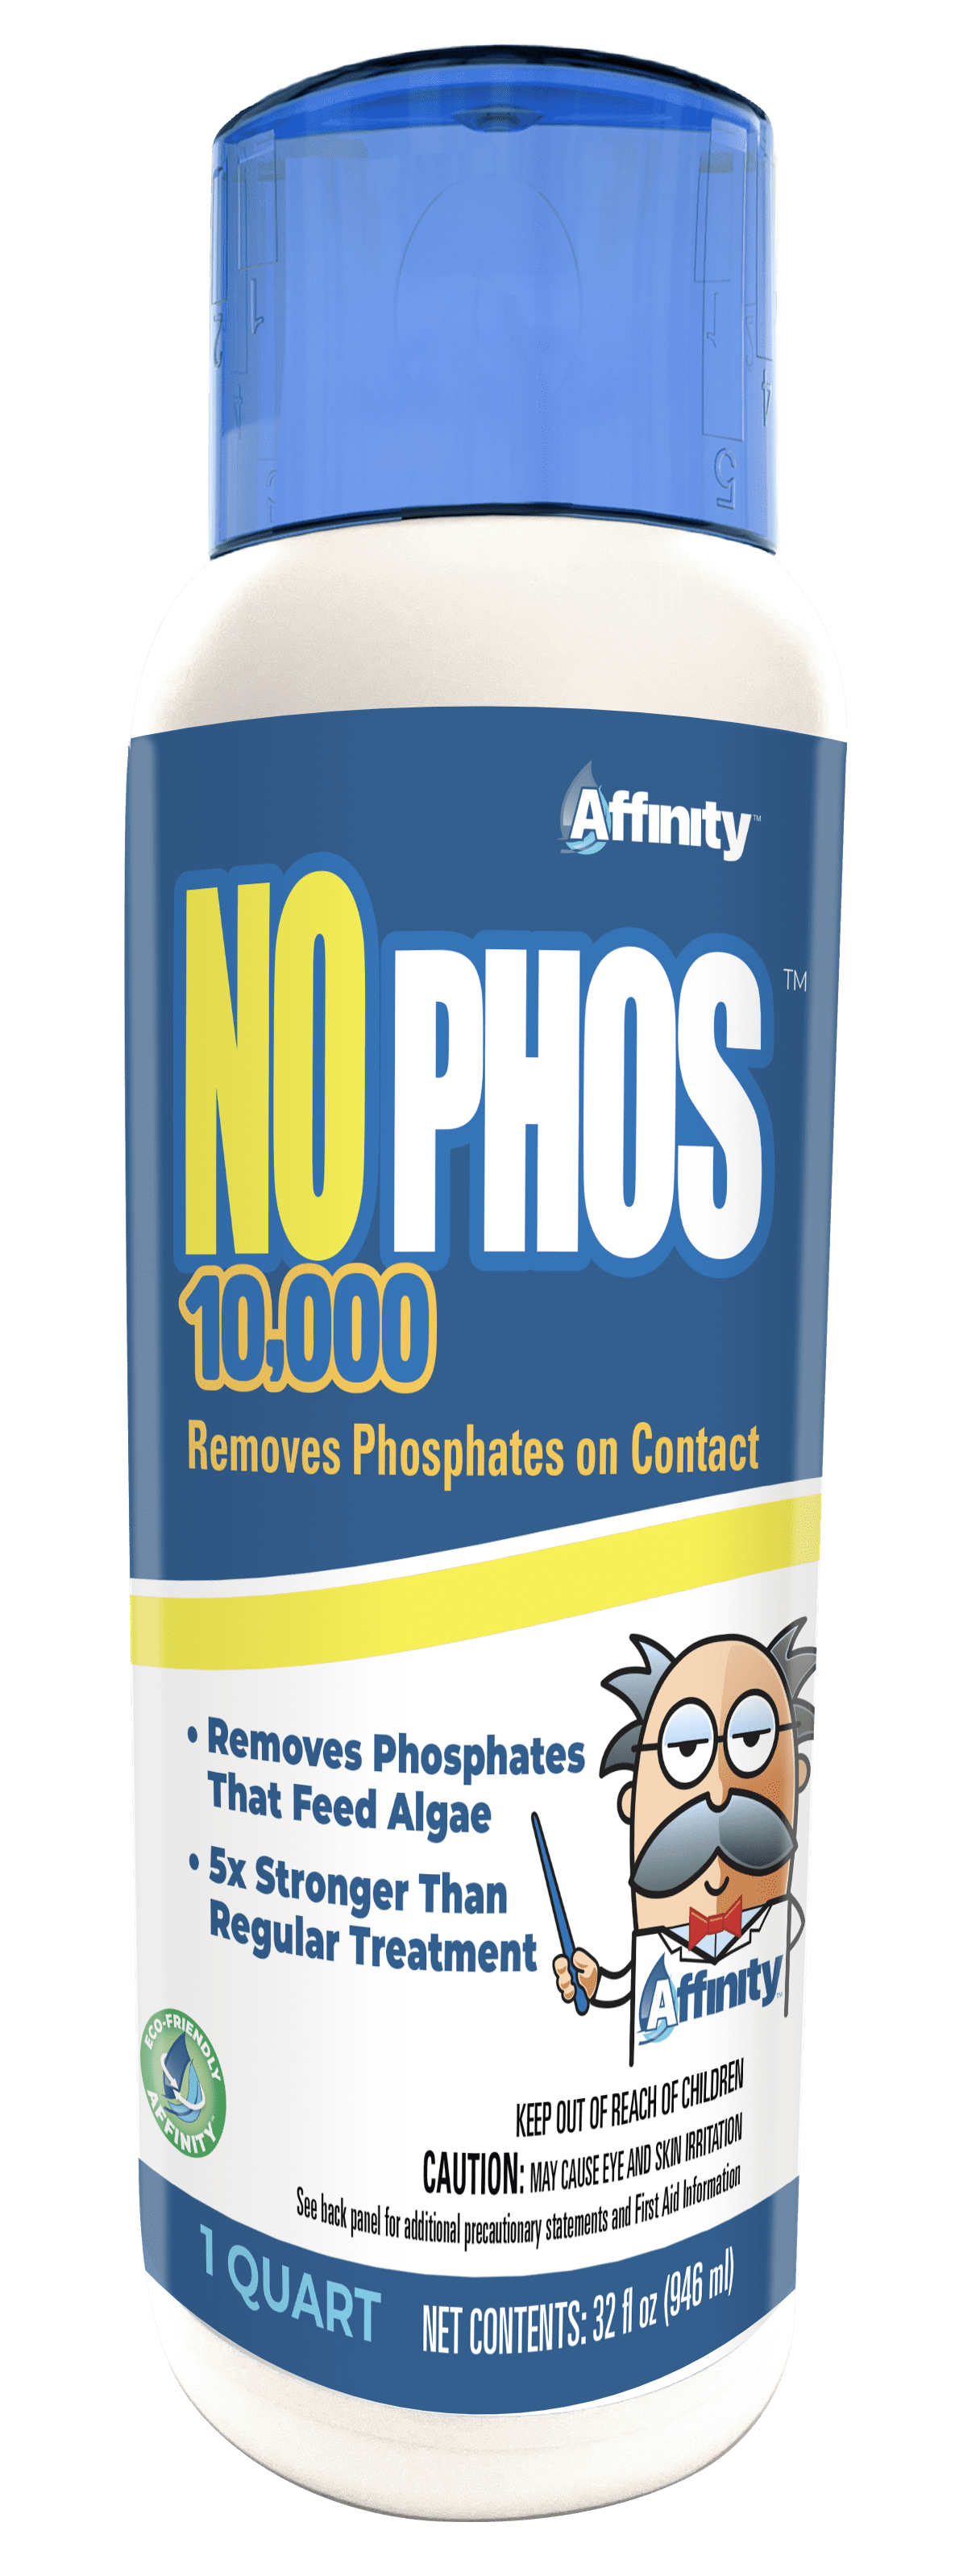 Affinity No Phos 10000, 1 qt.